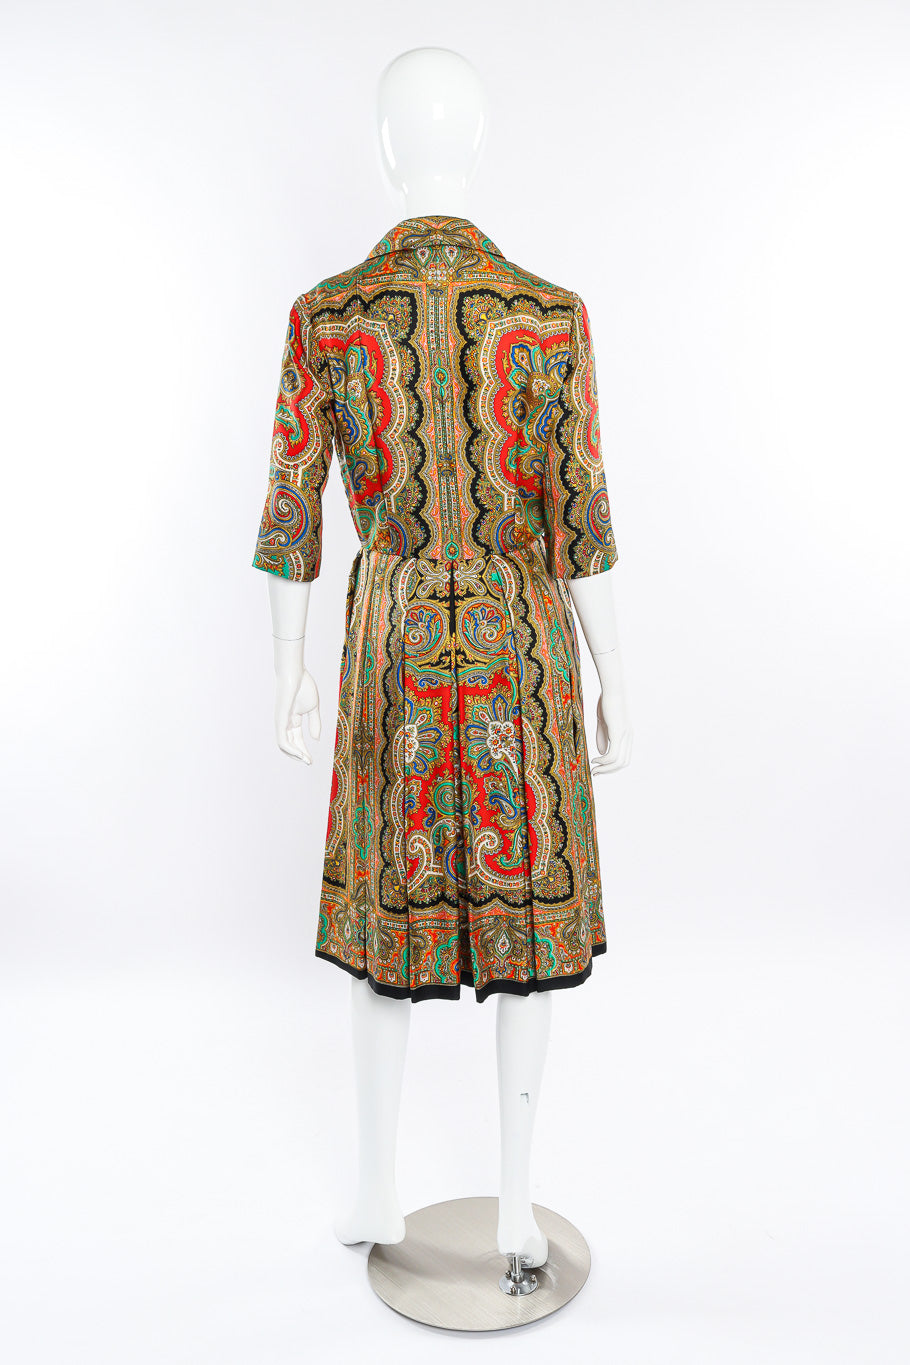 Vintage Holly Hoelscher Silk Paisley Shirt Dress back view on mannequin @Recessla